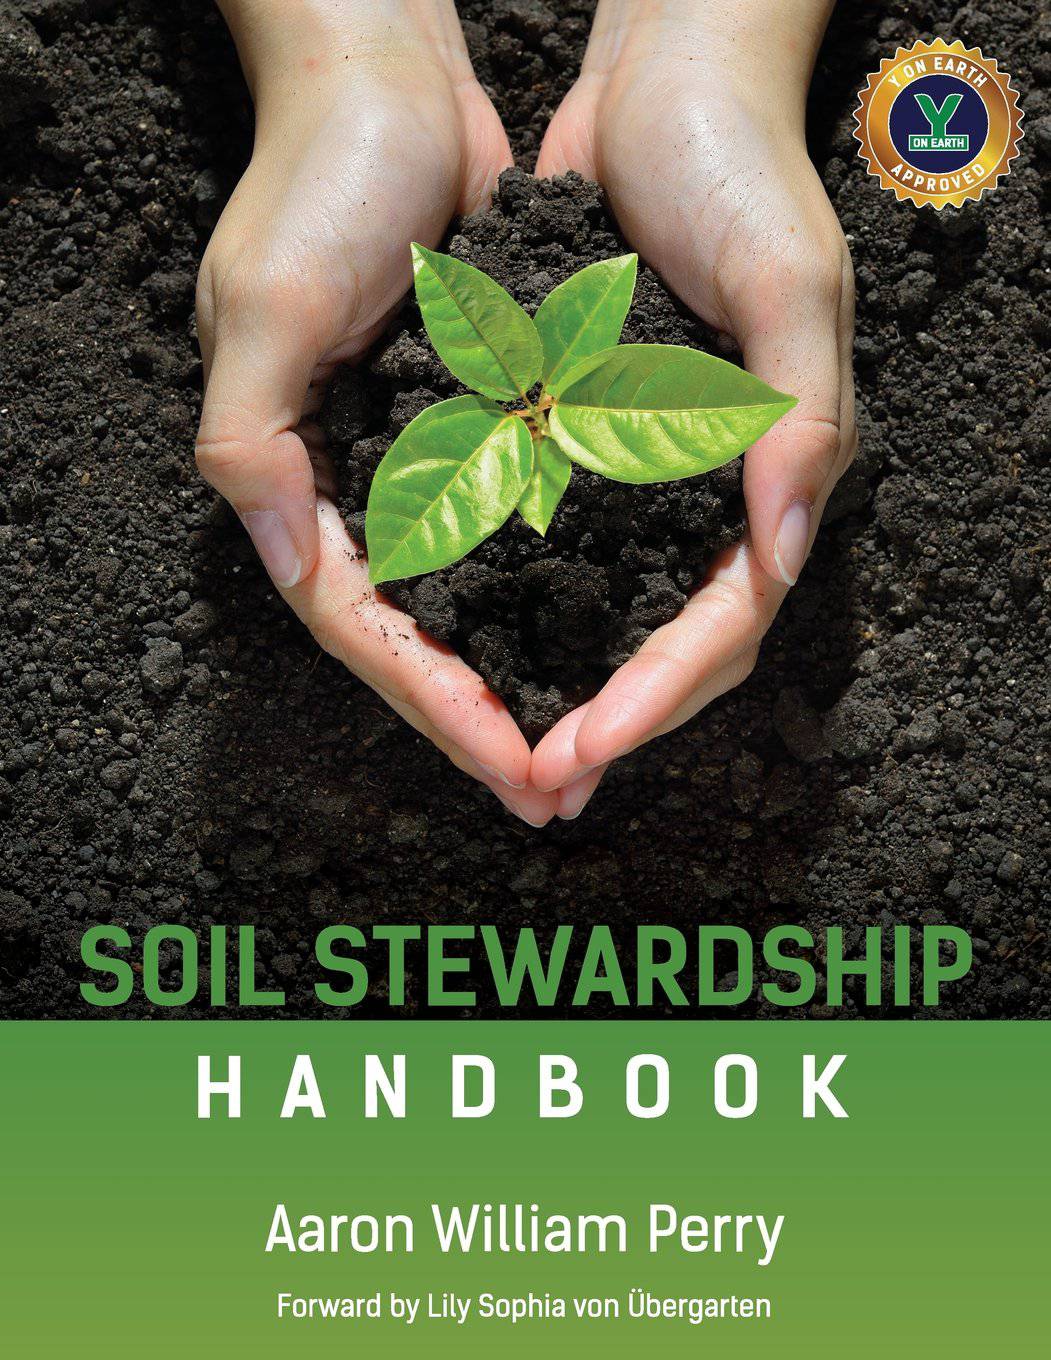 The Soil Stewardship Handbook by Aaron William Perry - The Josephine Porter Institute